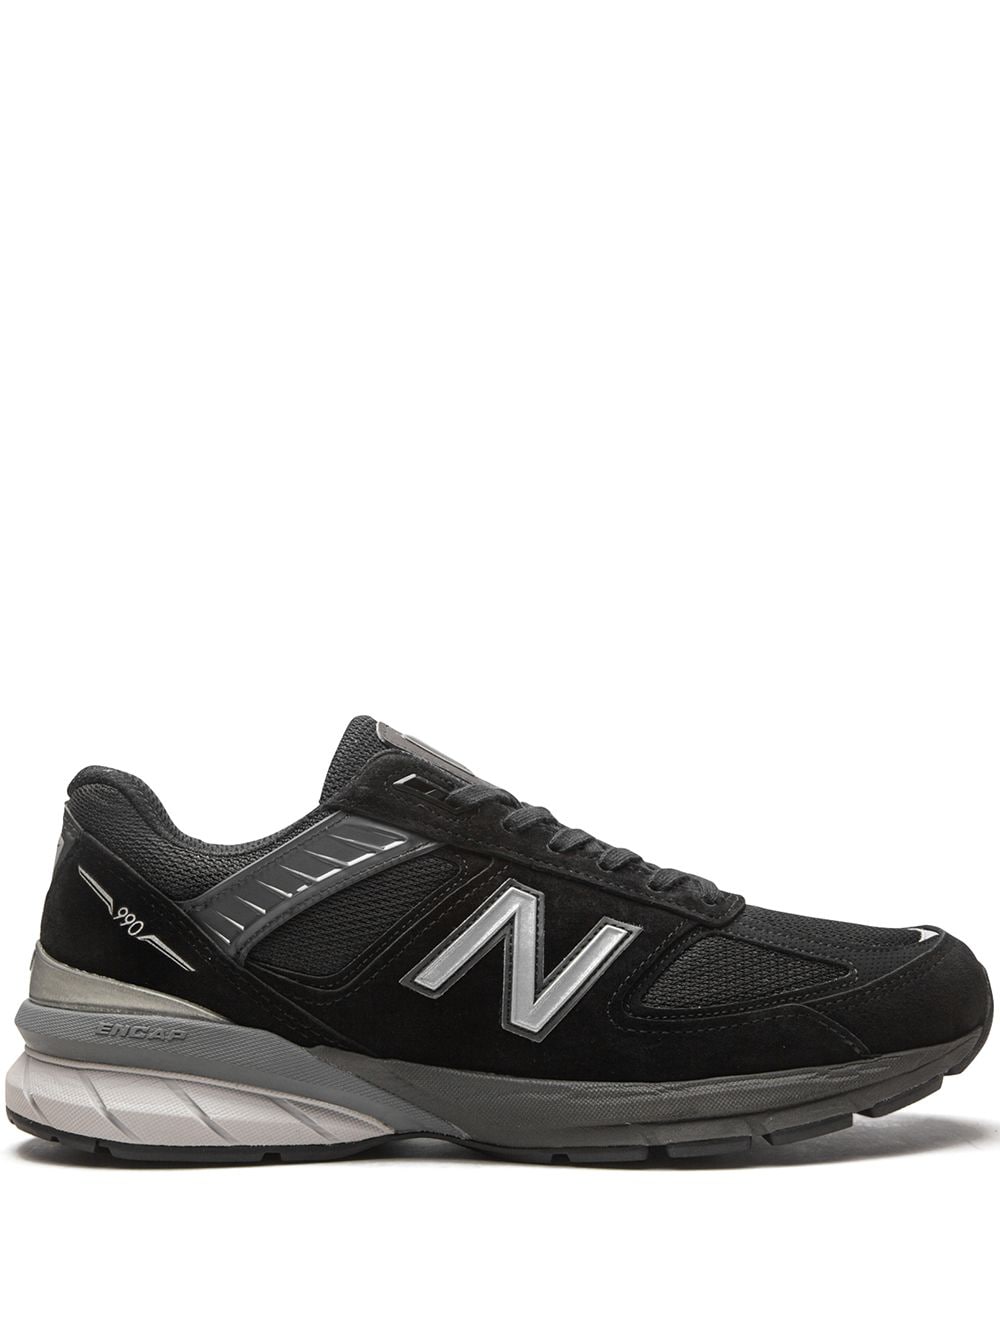 New Balance M990 "Black/Silver" sneakers von New Balance